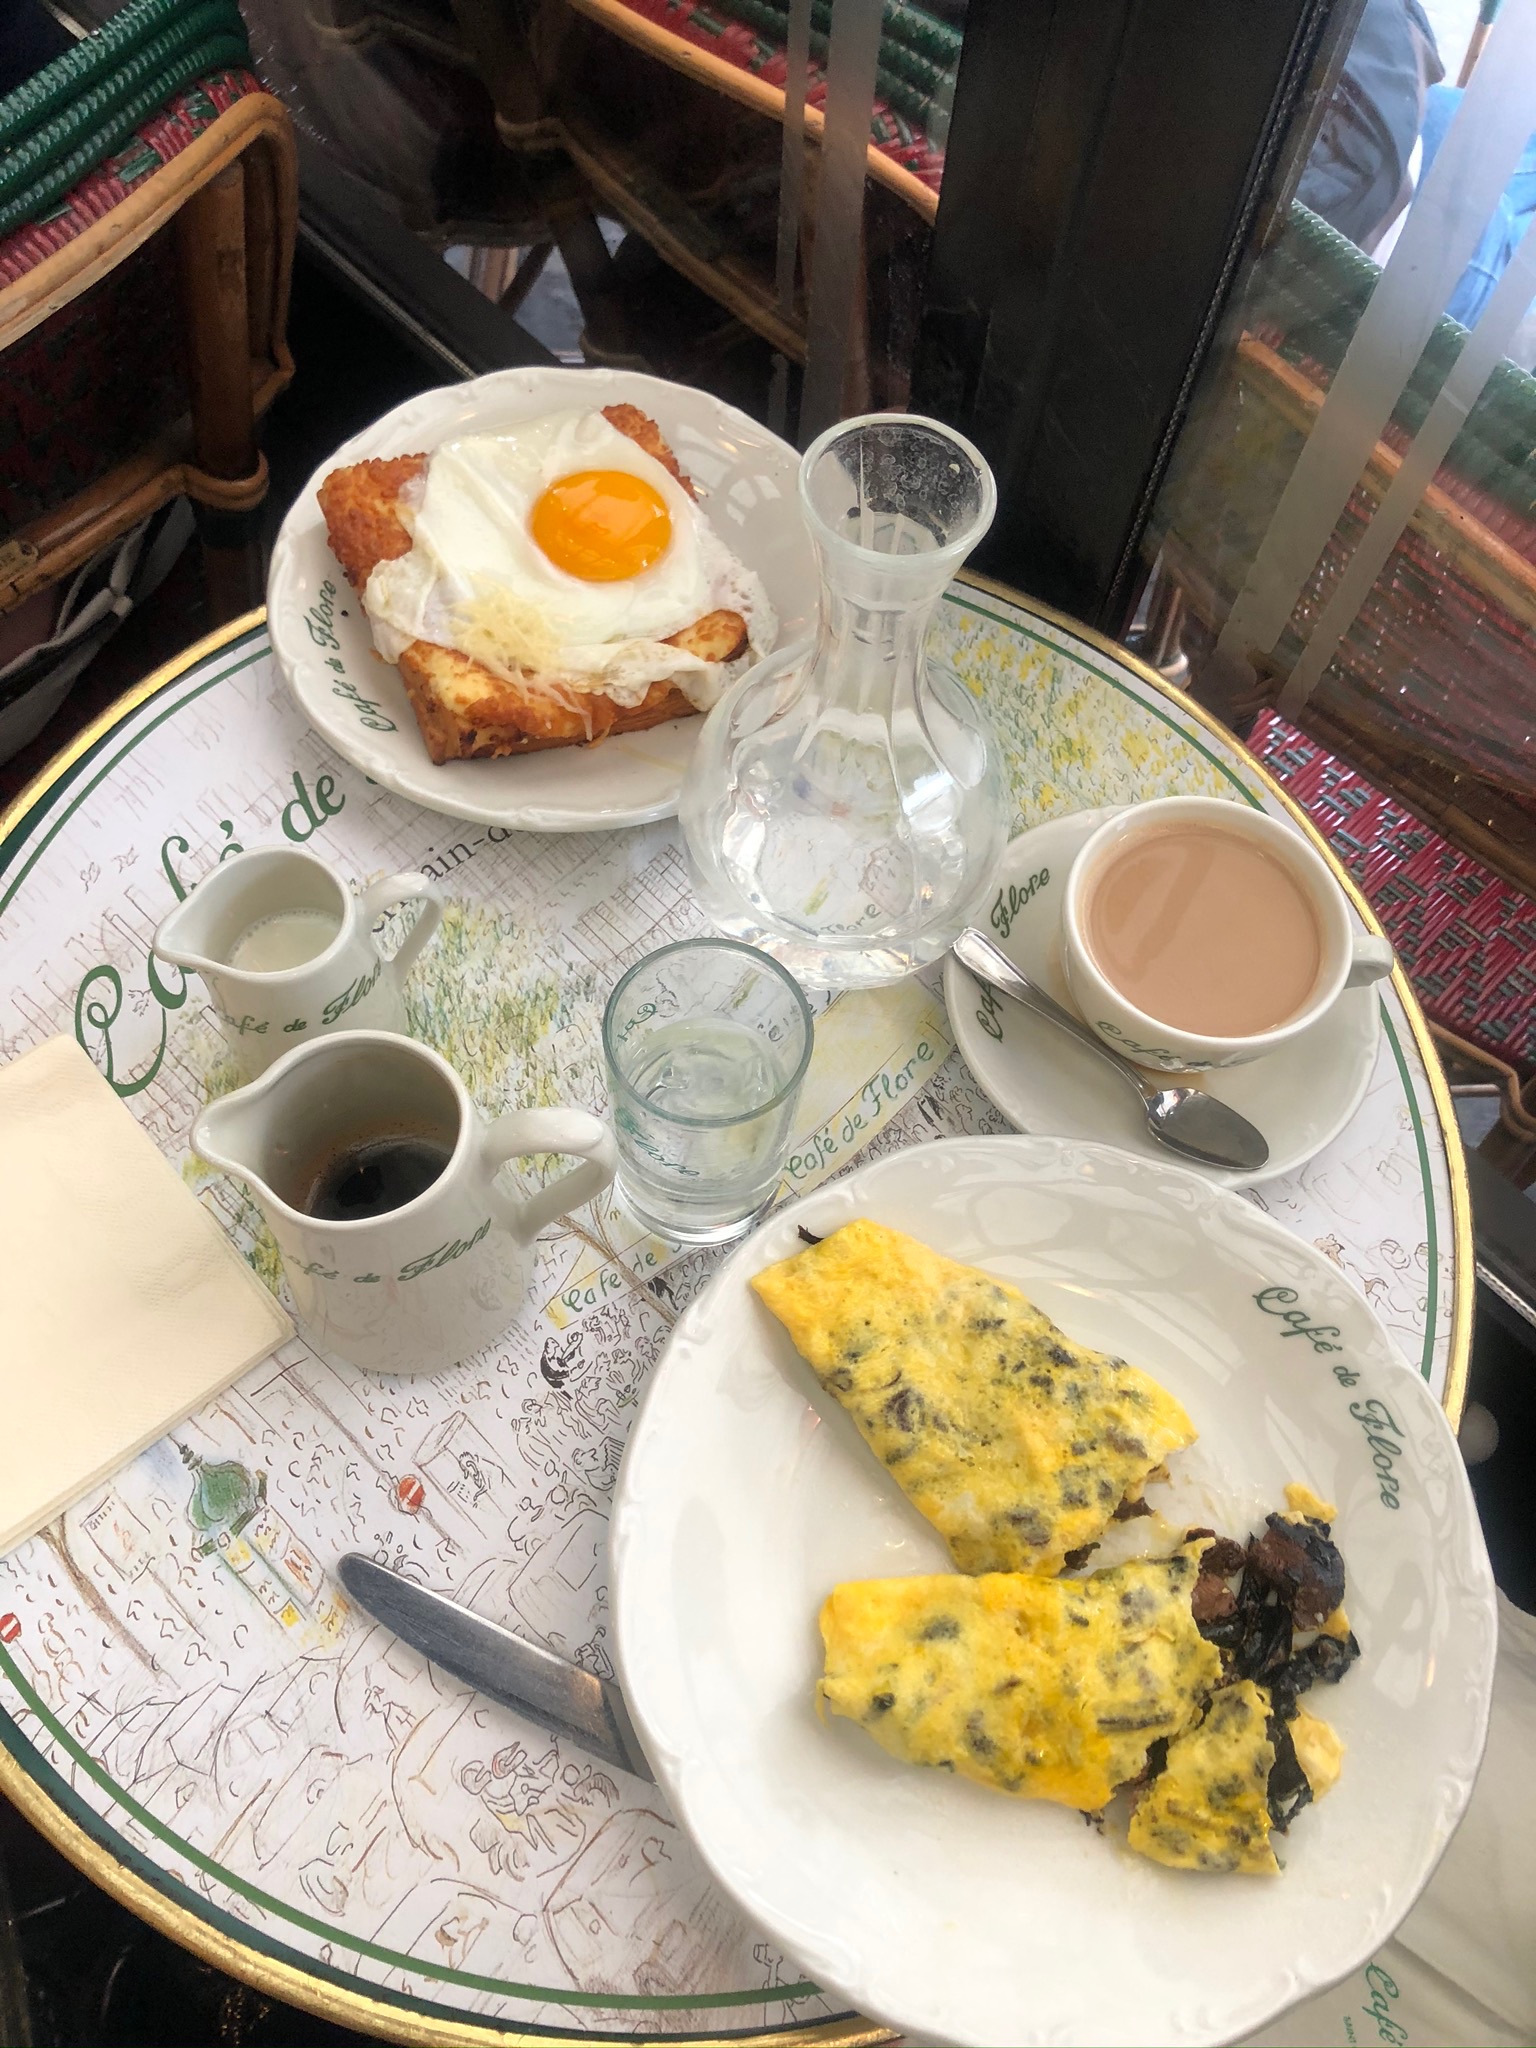 Cafe de Flore - croque madame, omelette and coffee